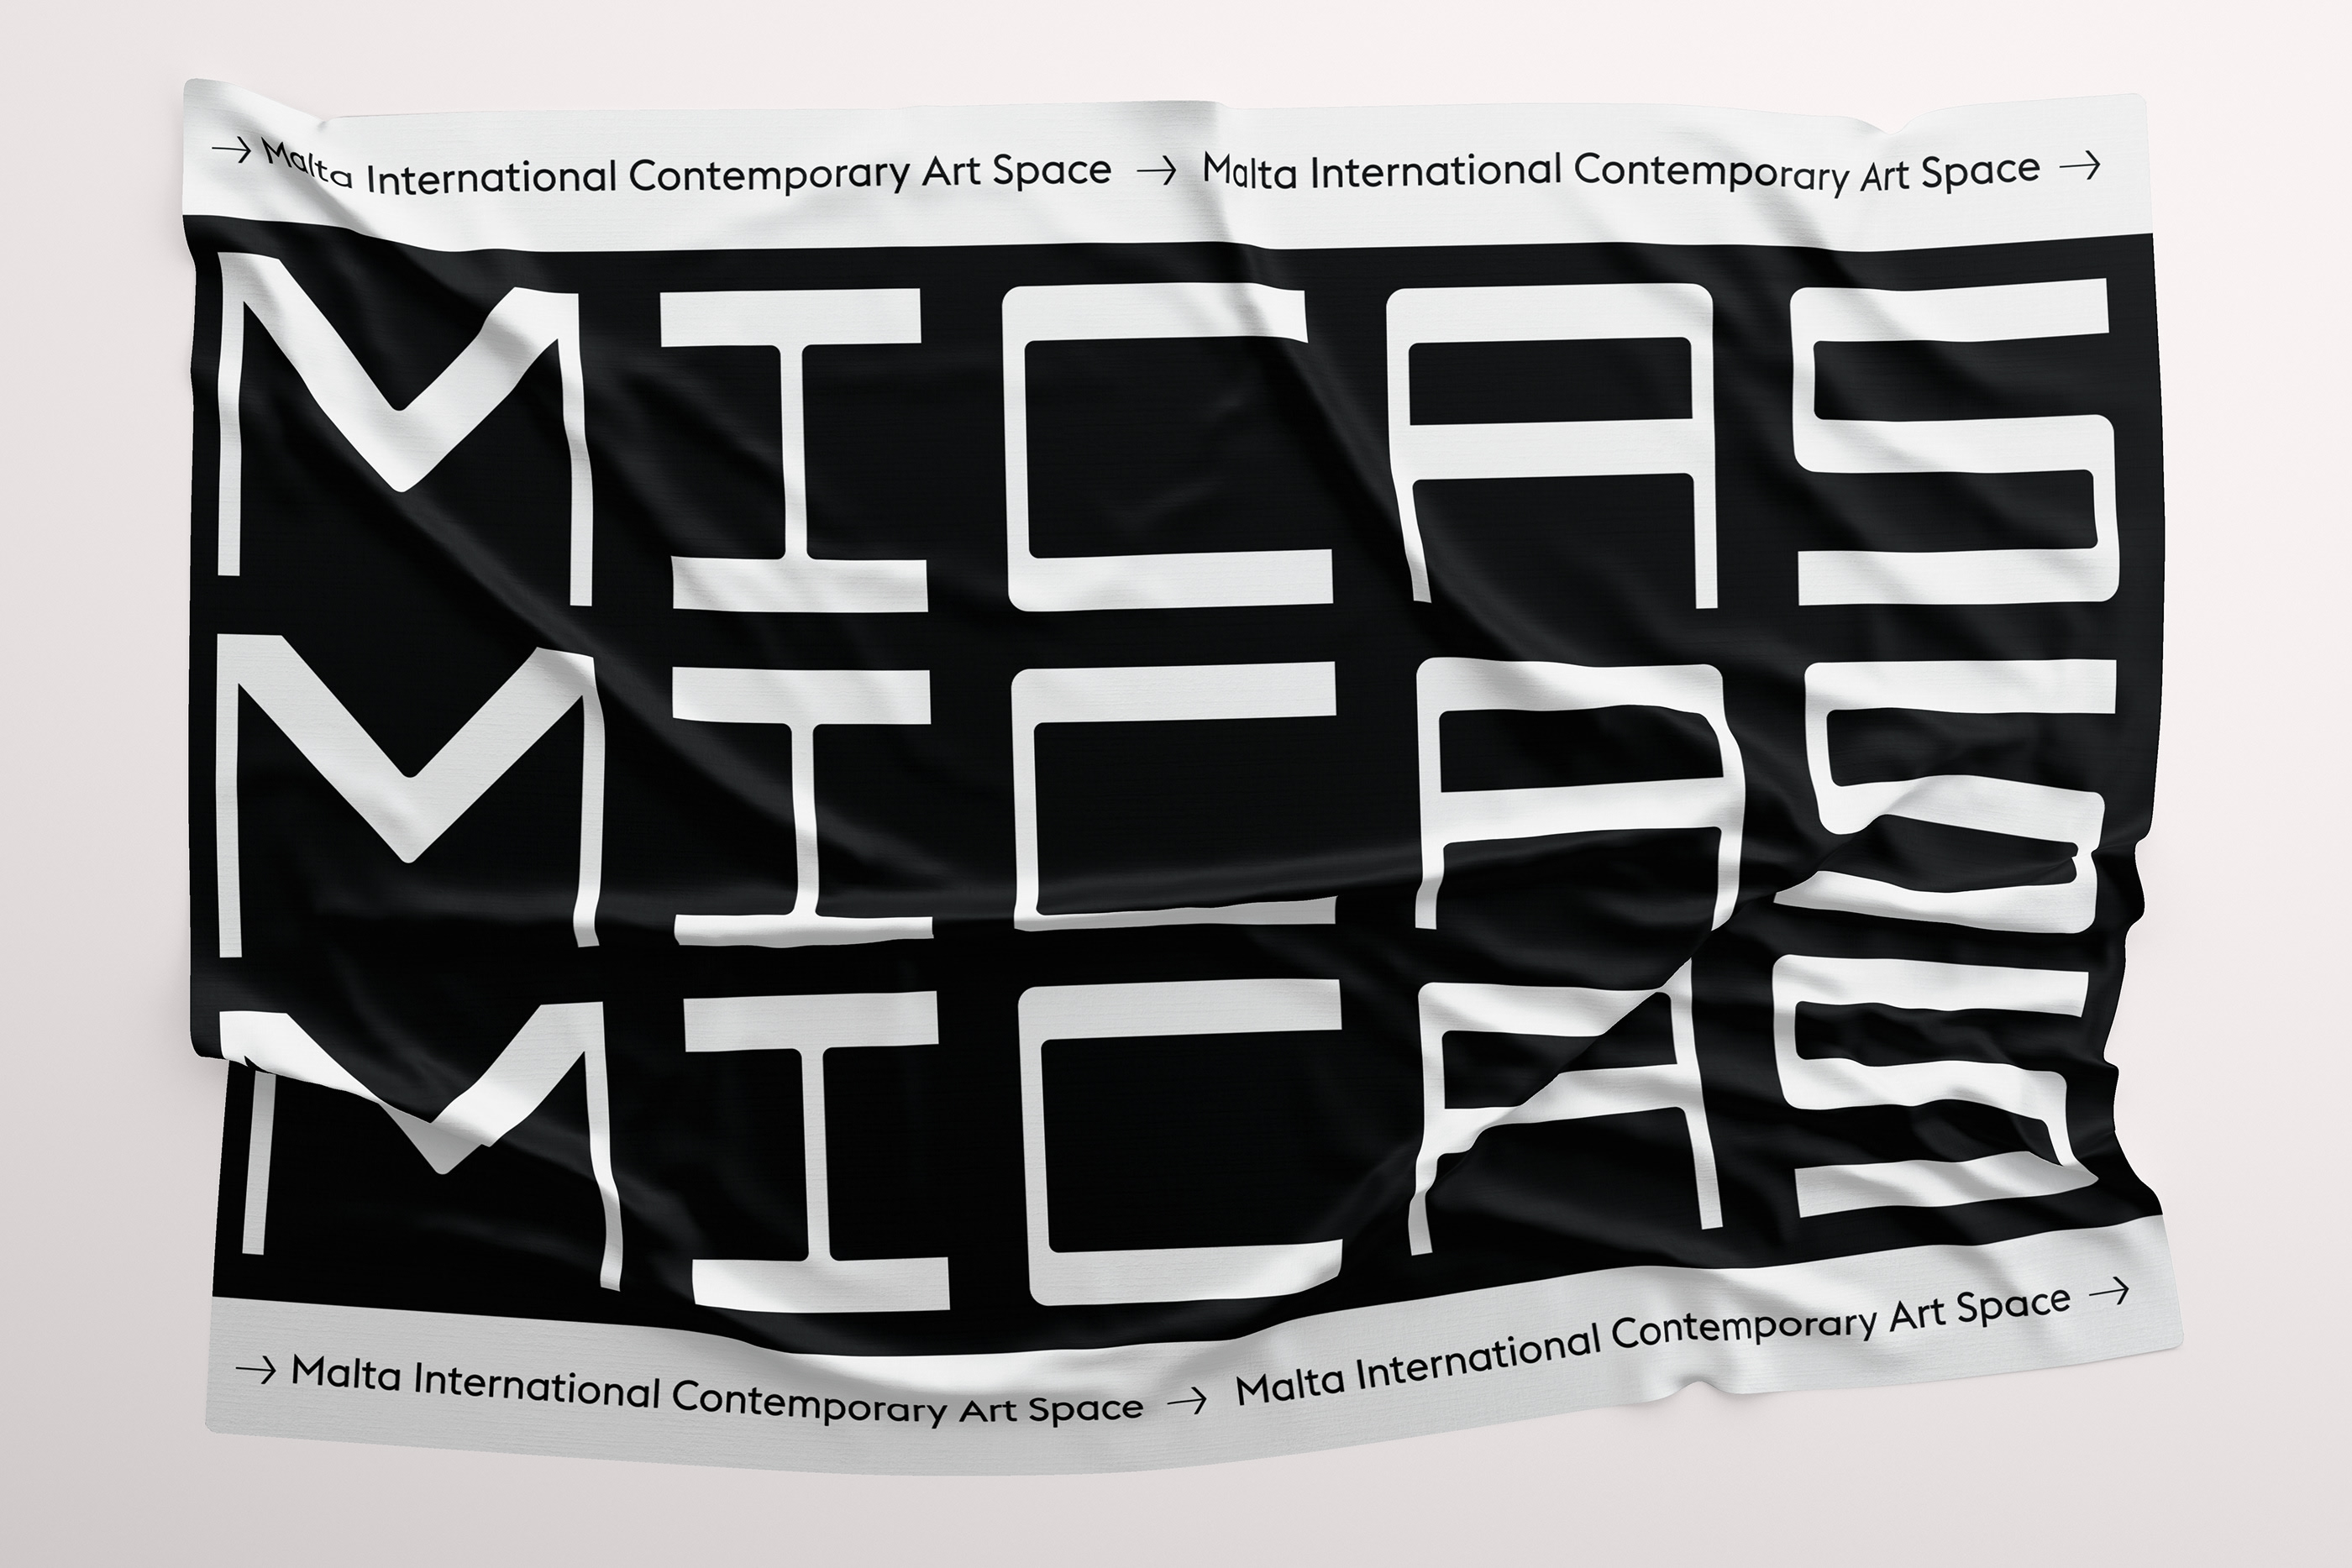 MICAS - Malta International Contemporary Art Space on Behance490d8592265469.5e4a3e8a40819.jpg